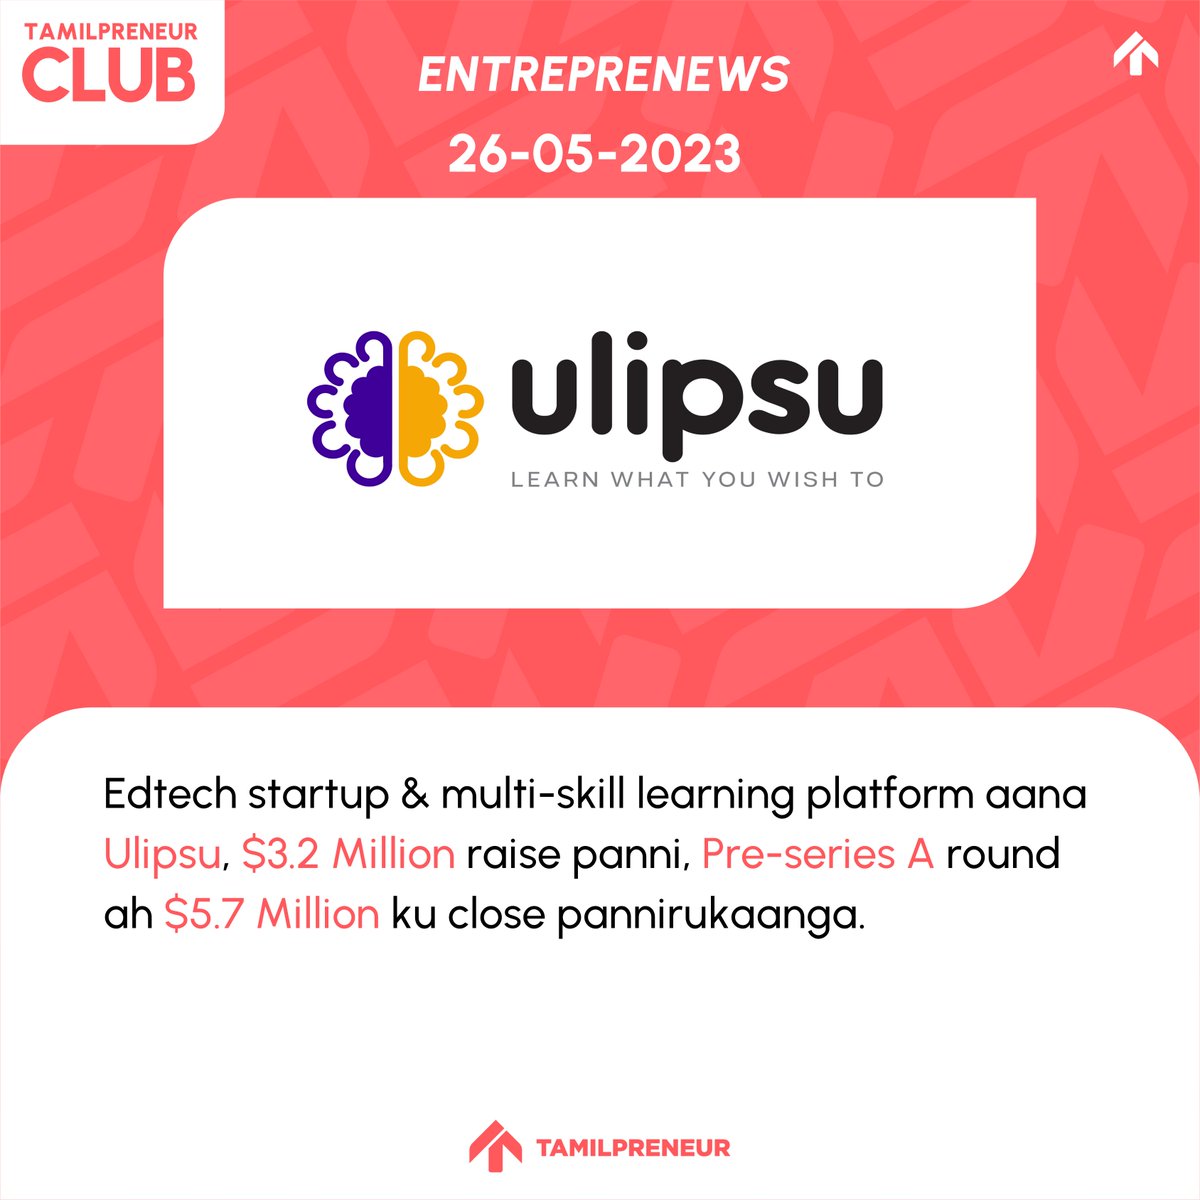 #Entreprenews - May 26

#Tamilpreneur #Tamilpreneurclub #Edtech #elearning #skills #Ulipsu #preseriesA #funding #investment #VC #venturecapitals